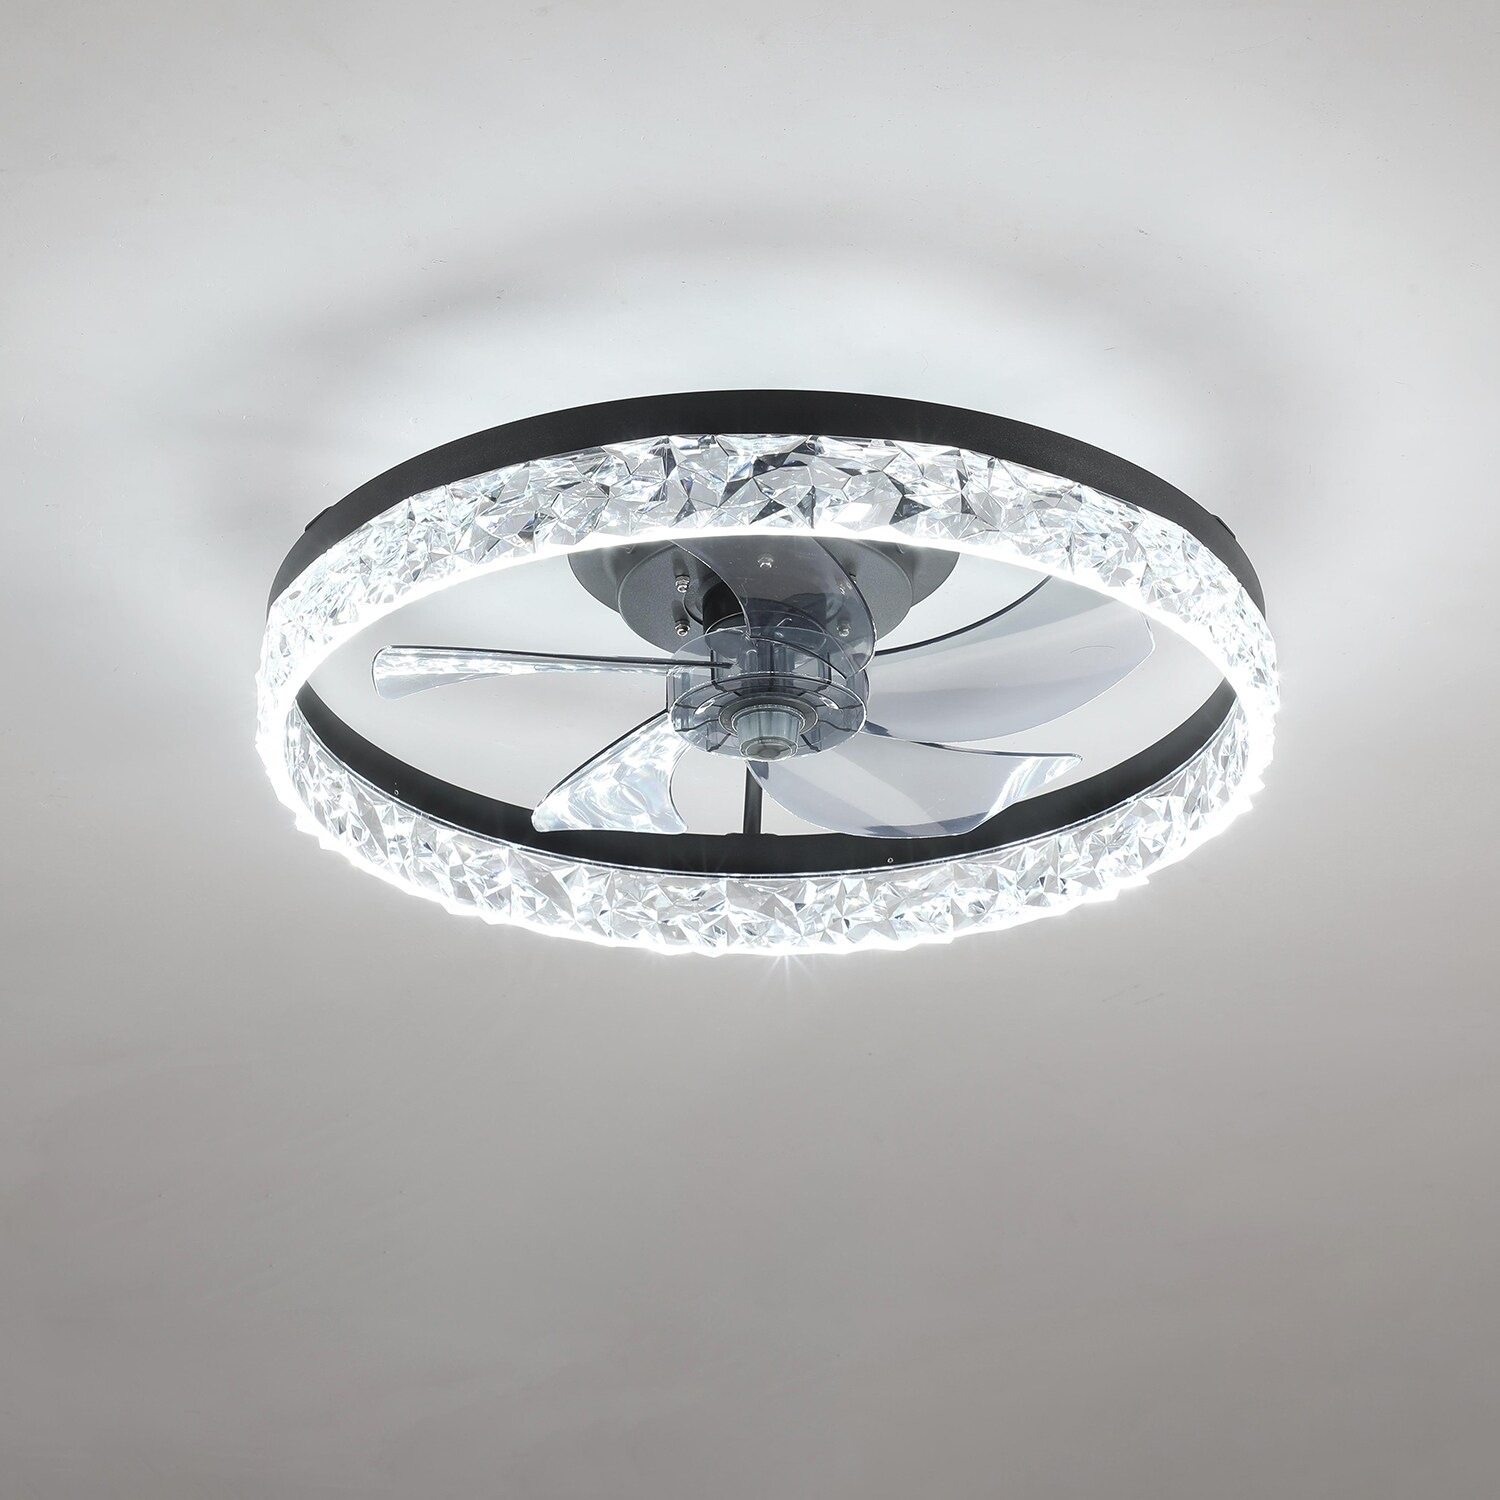 SINOFURN 20-in Black Color-changing Indoor Flush Mount Ceiling Fan 